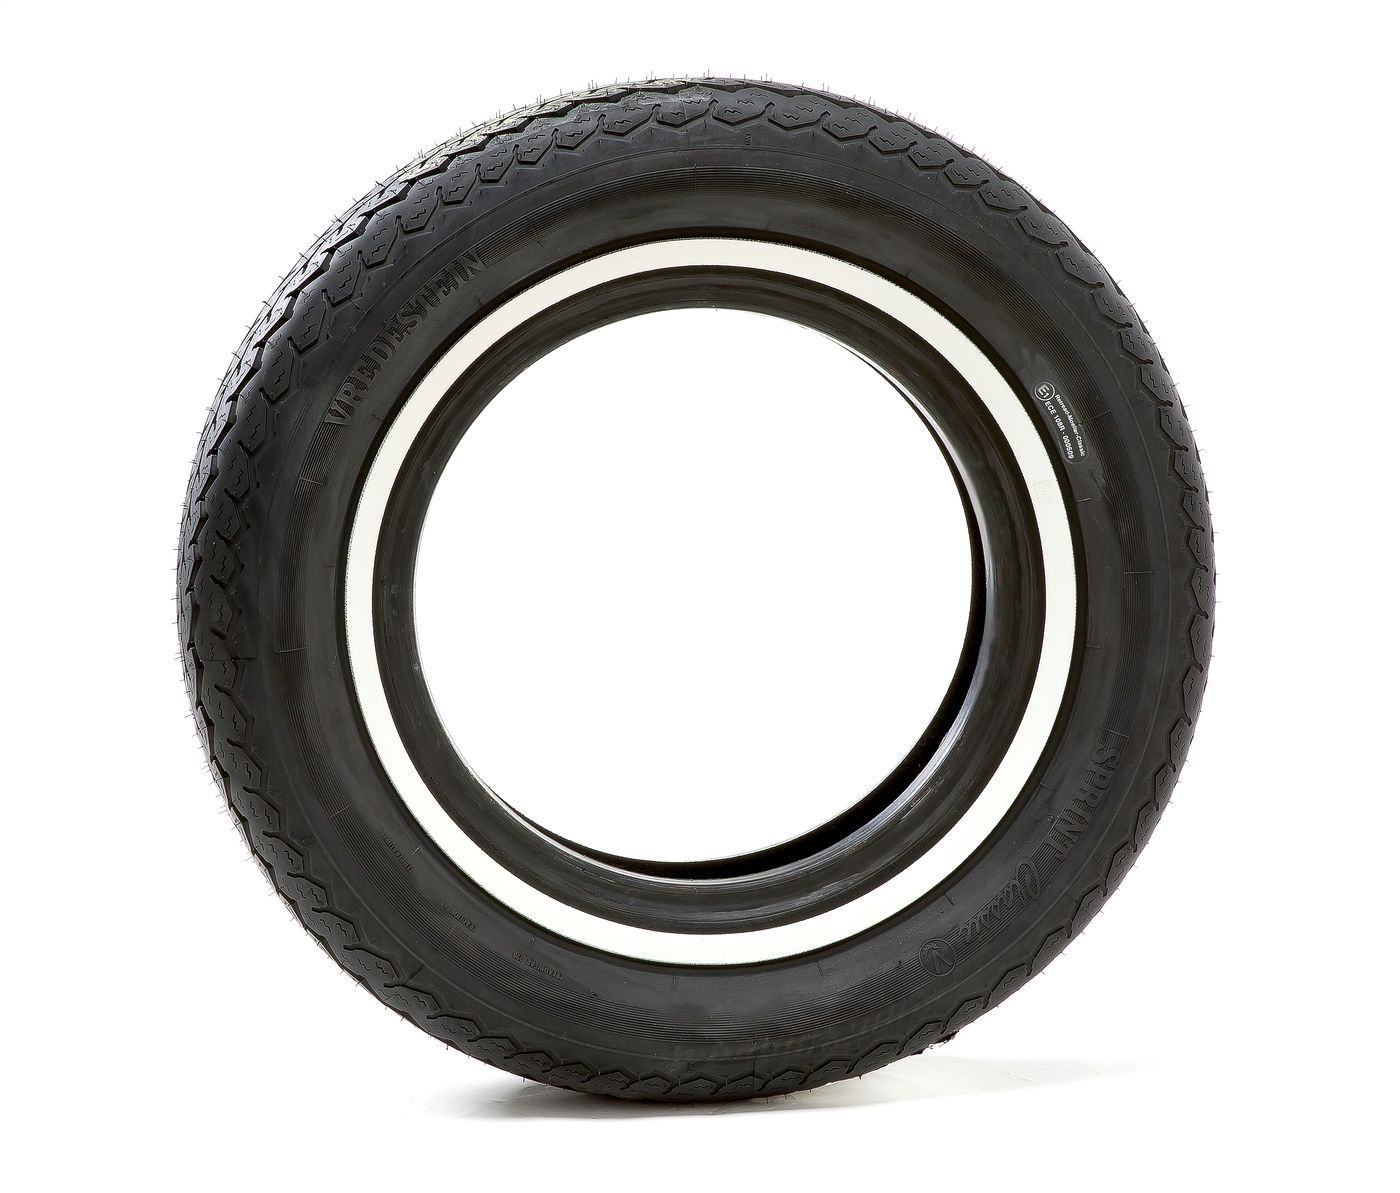 Reifen
Tyre
Pneu
Band
Neumático
Pneumatici
Pneu